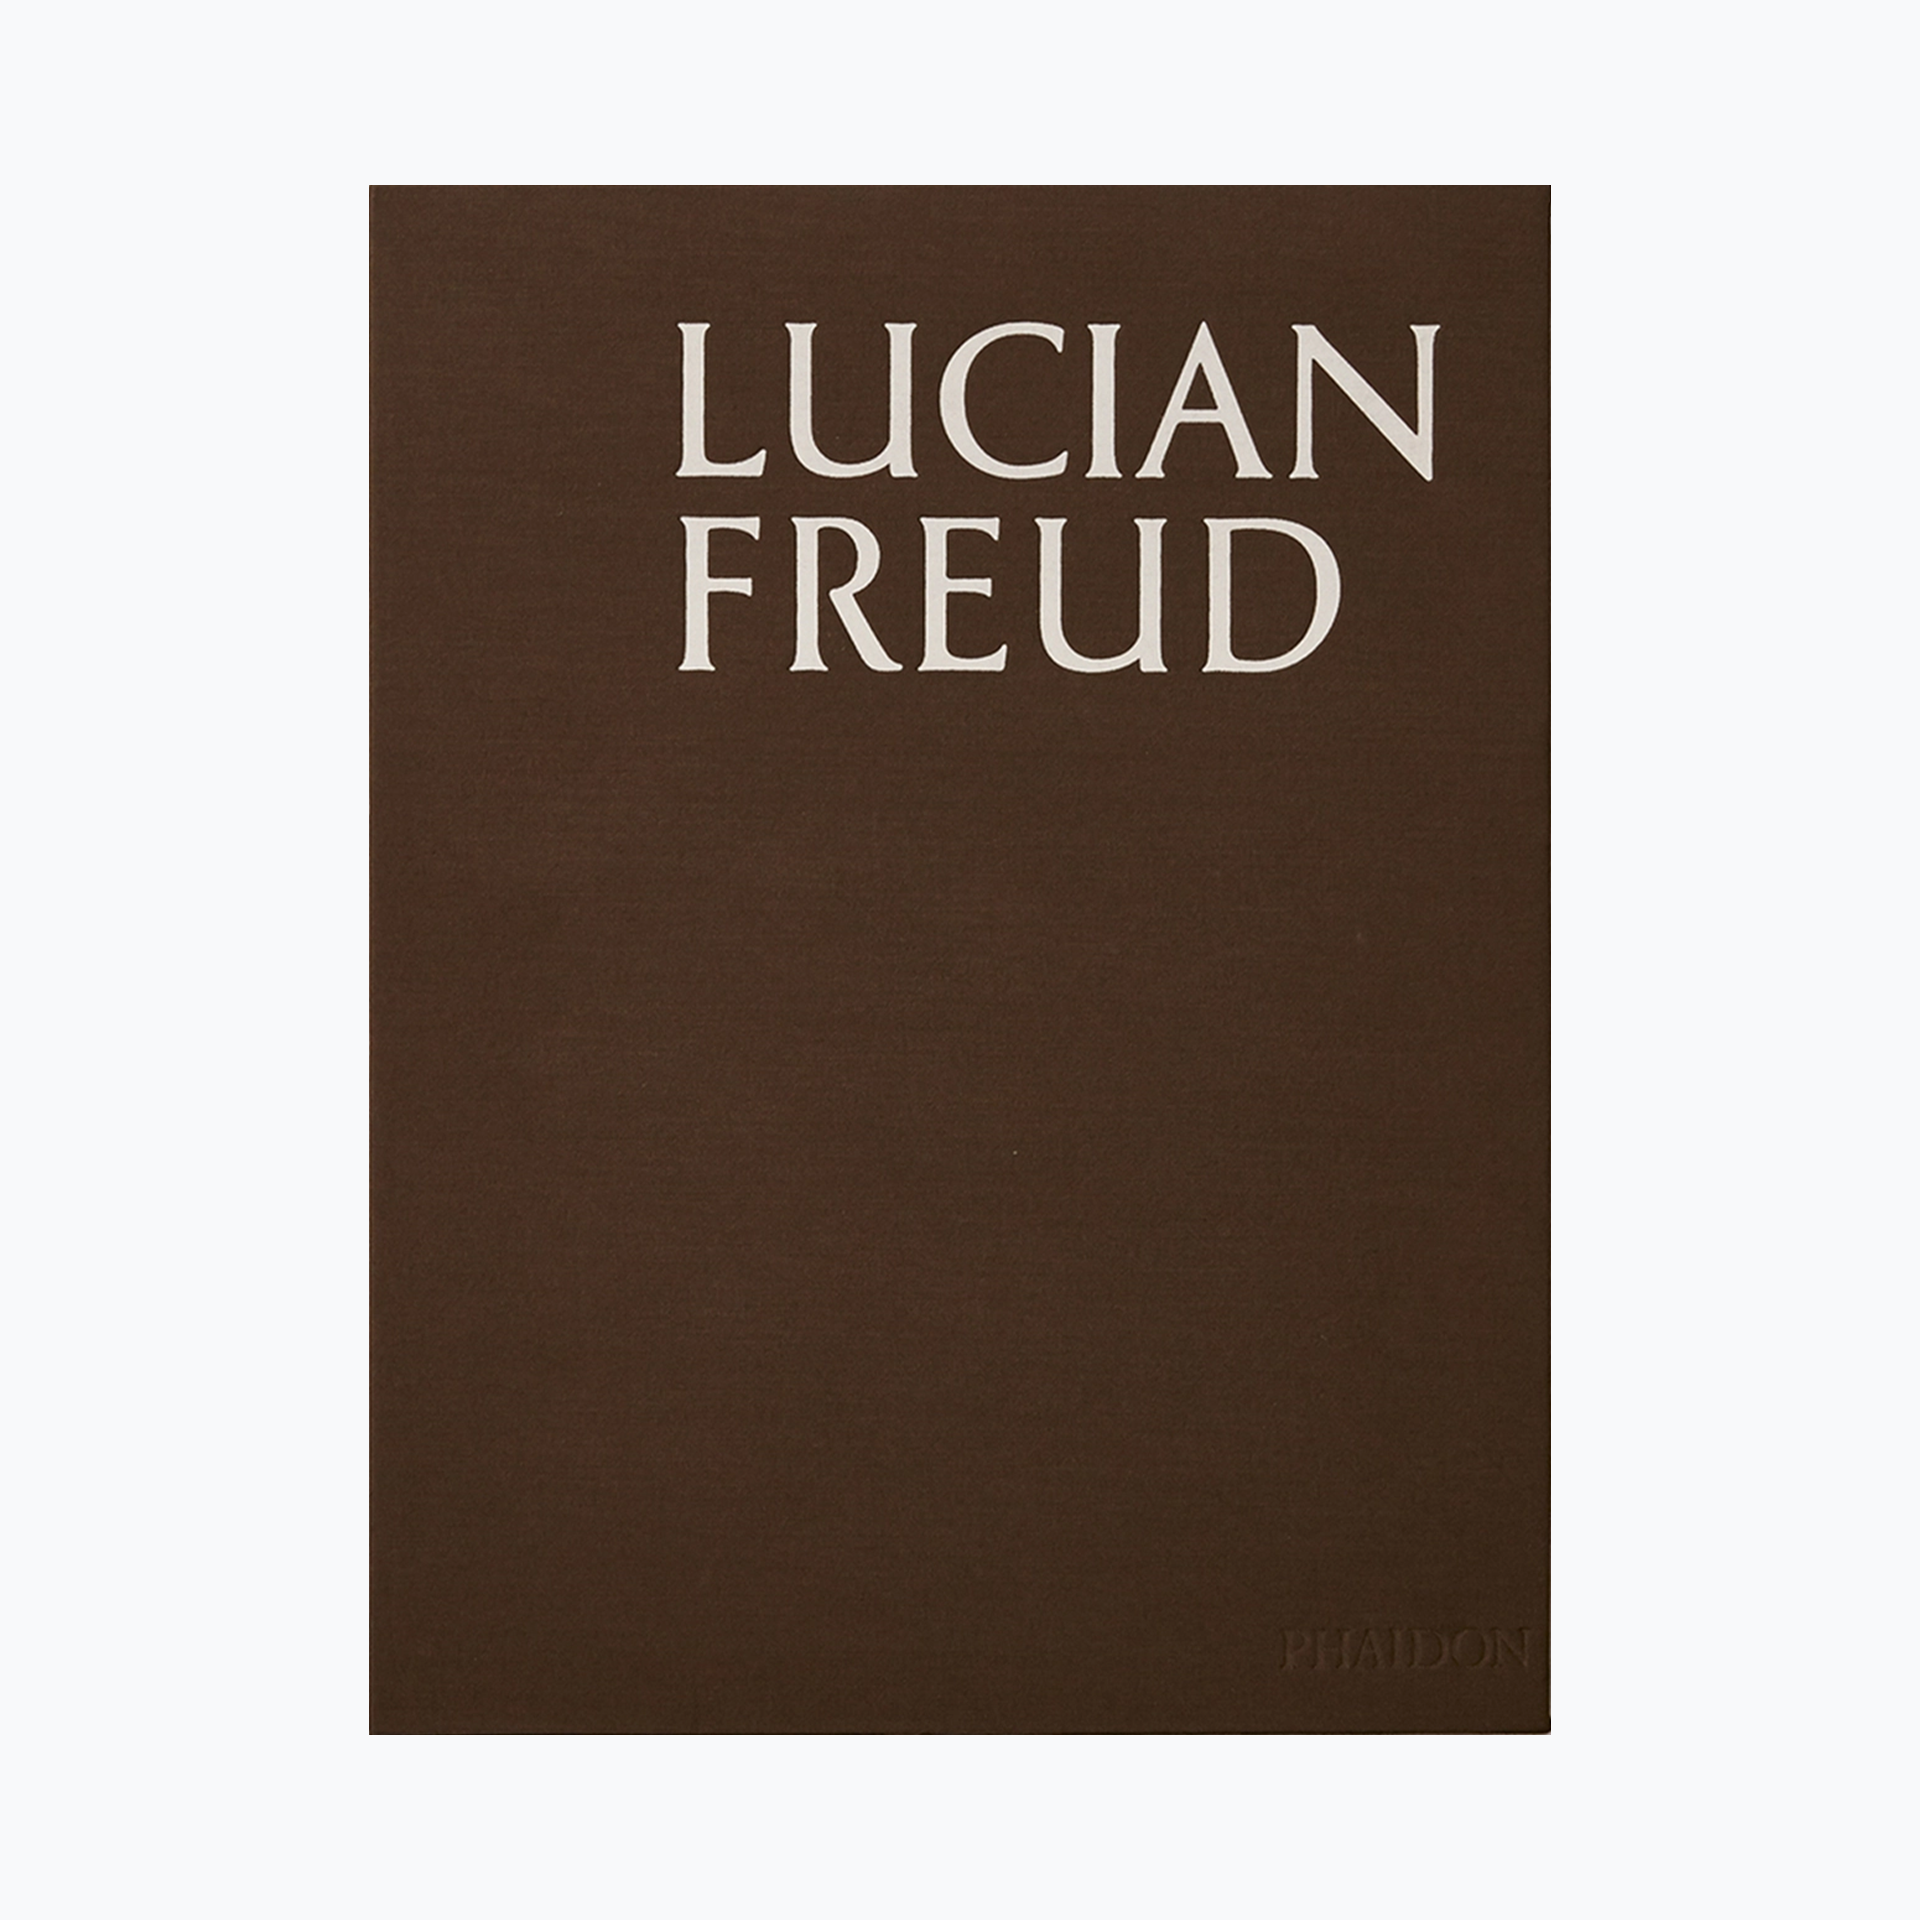 Lucian Freud (pre-order)